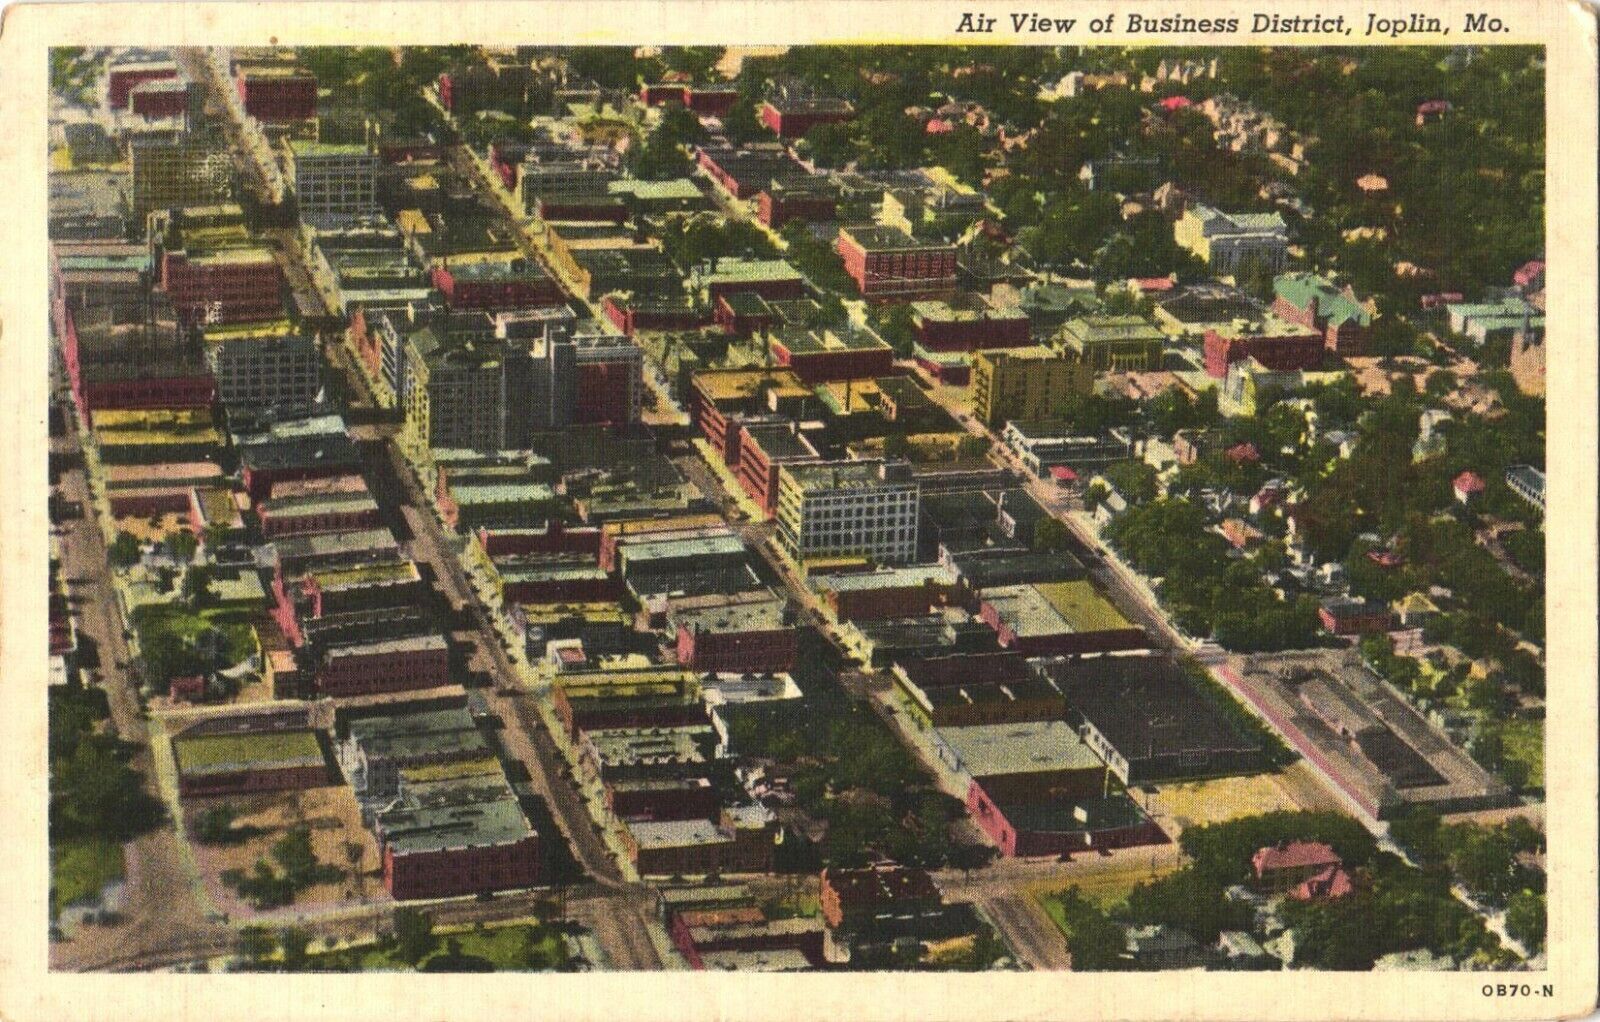 Air View of Business District, Joplin, Missouri Postcard